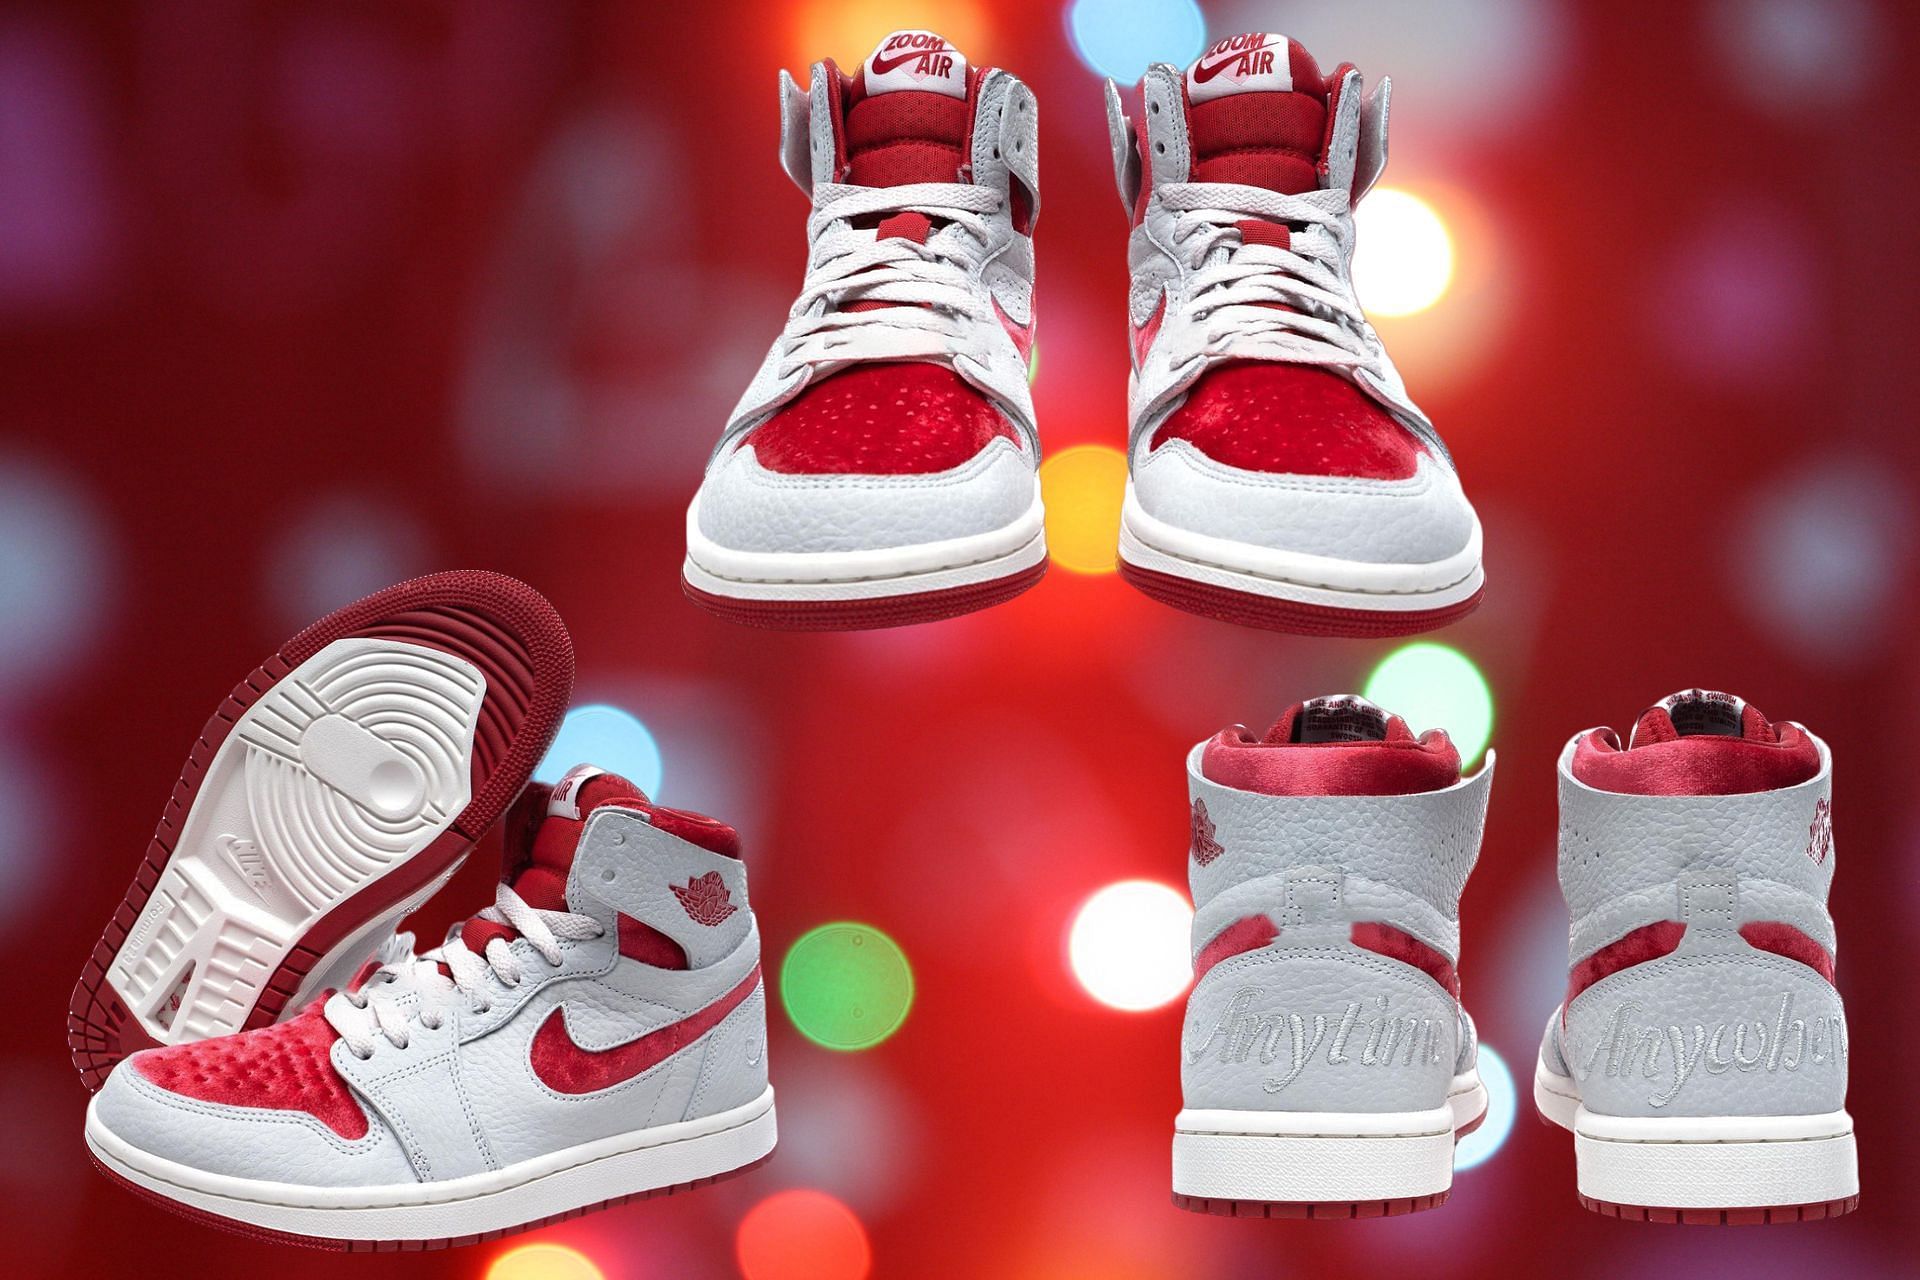 Air Jordan 1 Zoom CMFT 2 Valentines Day Women's Shoes